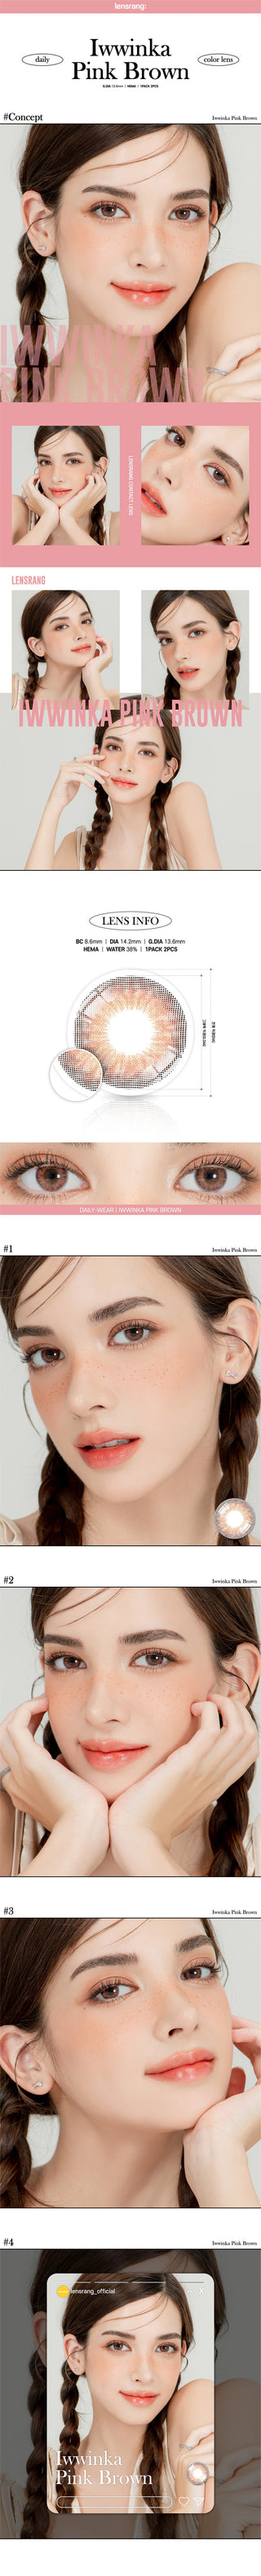 Lensrang Iwwinka Pink Brown Color Contact Lens - EyeCandys